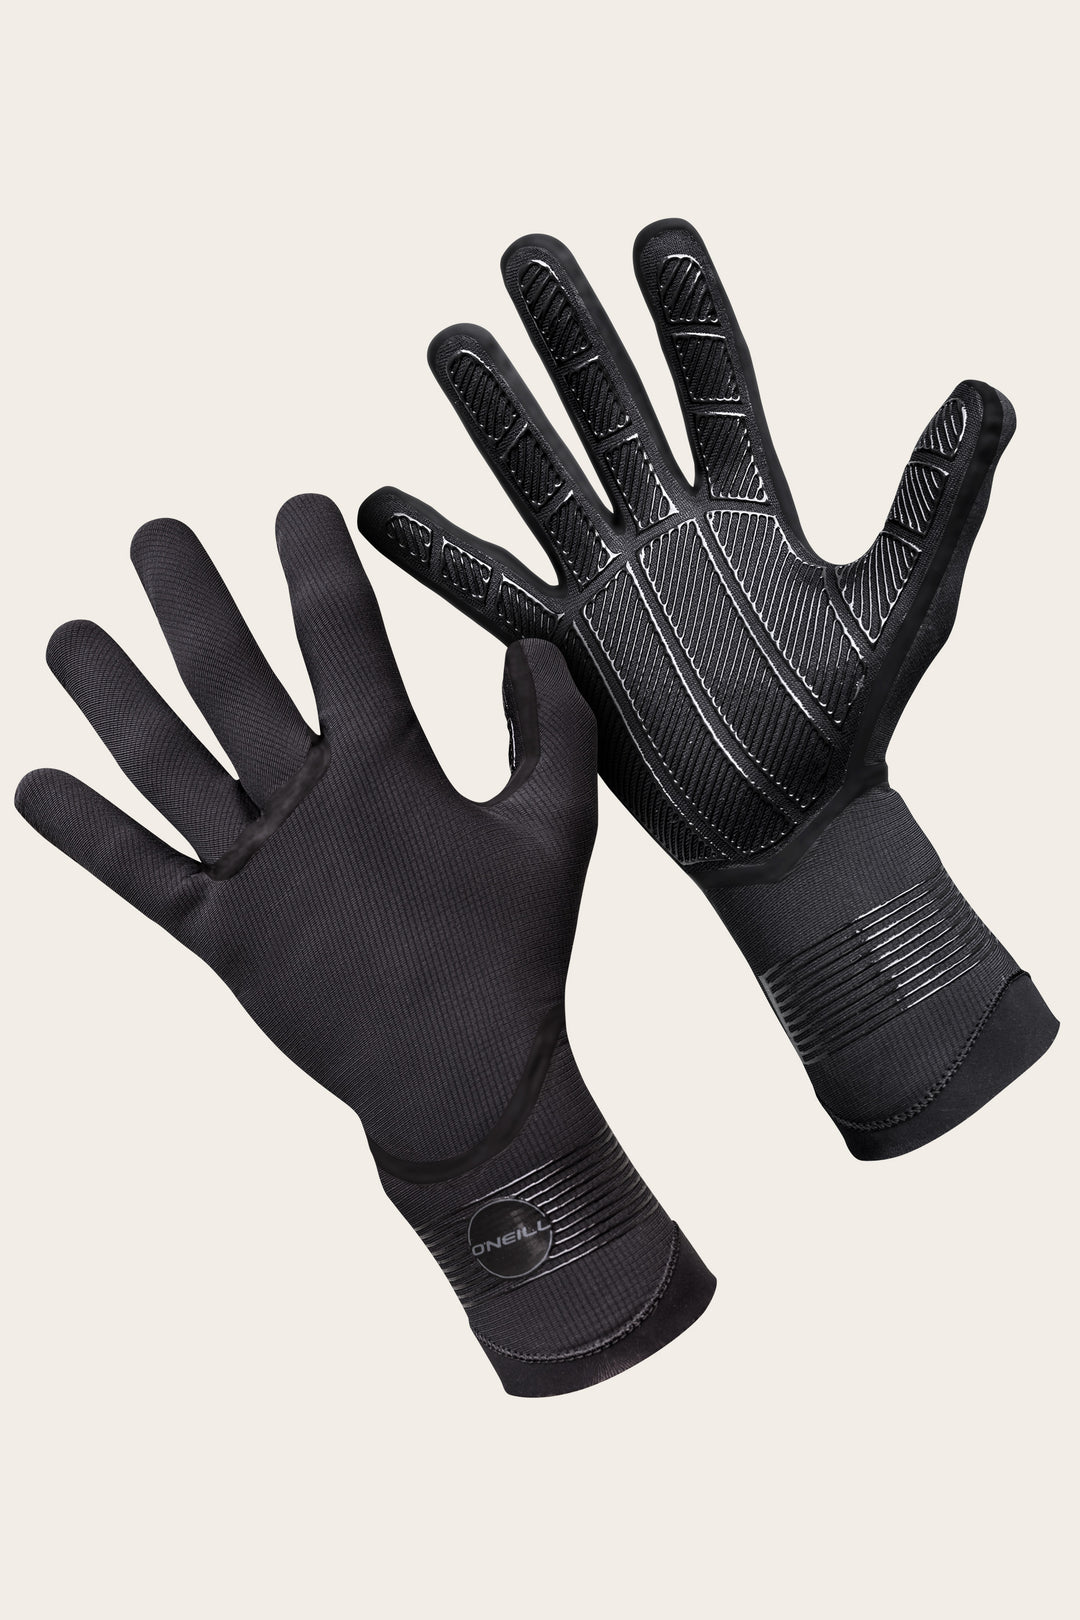 Psycho Tech 1.5mm Glove-O'Neill-black,cover,gloves,logo,o'neill,oneill wetsuit,wetsuit